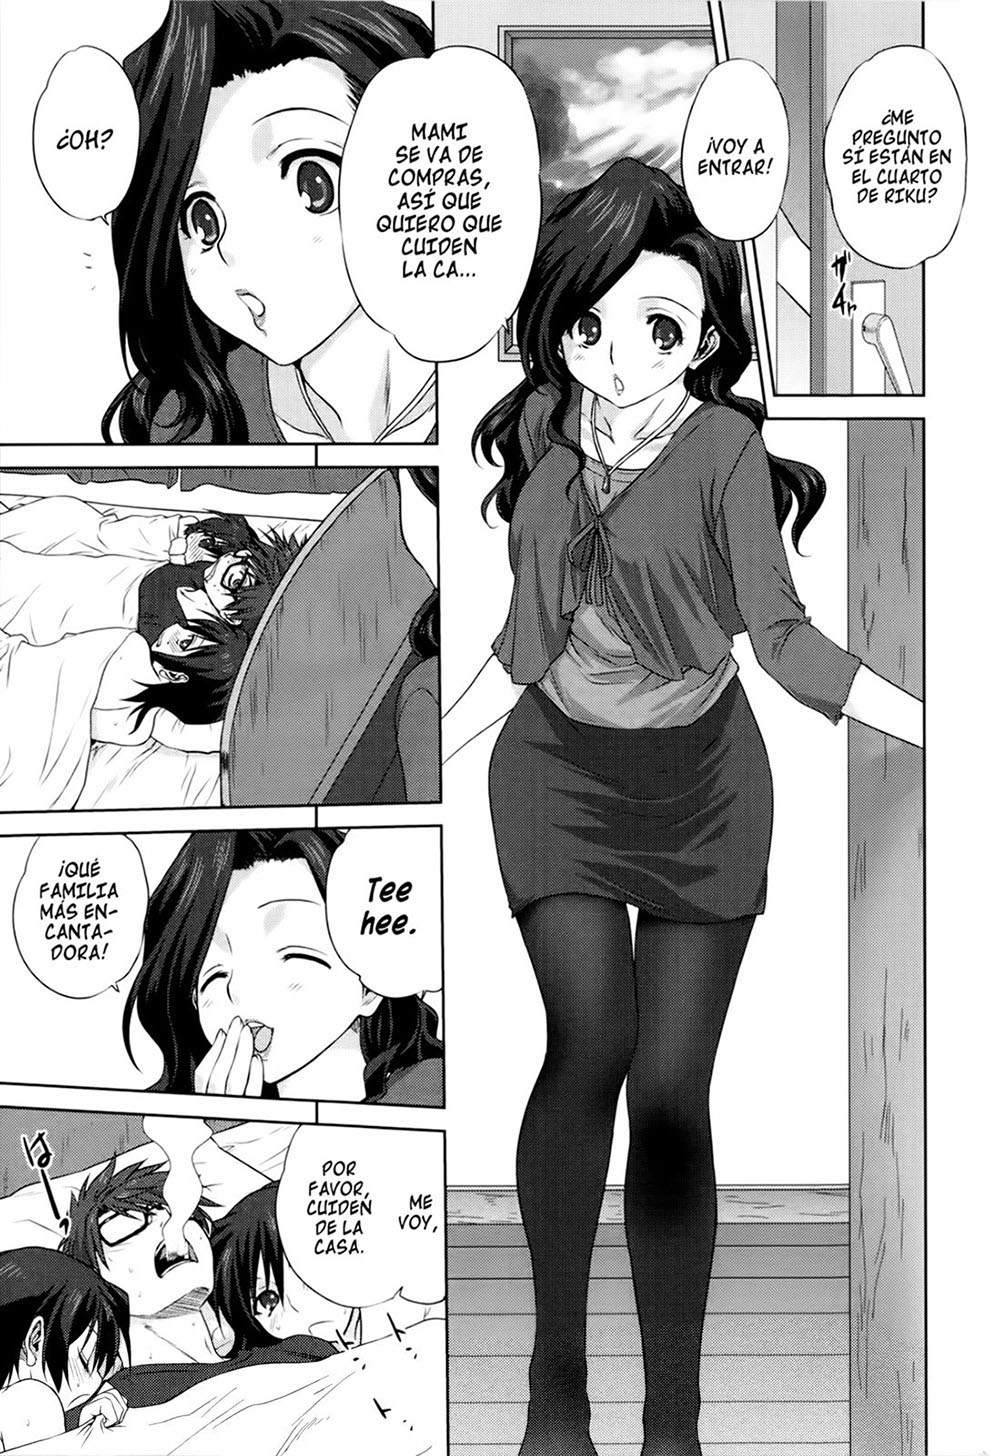 La Familia al Completo #2 - 2 - Comics Porno - Hentai Manga - Cartoon XXX